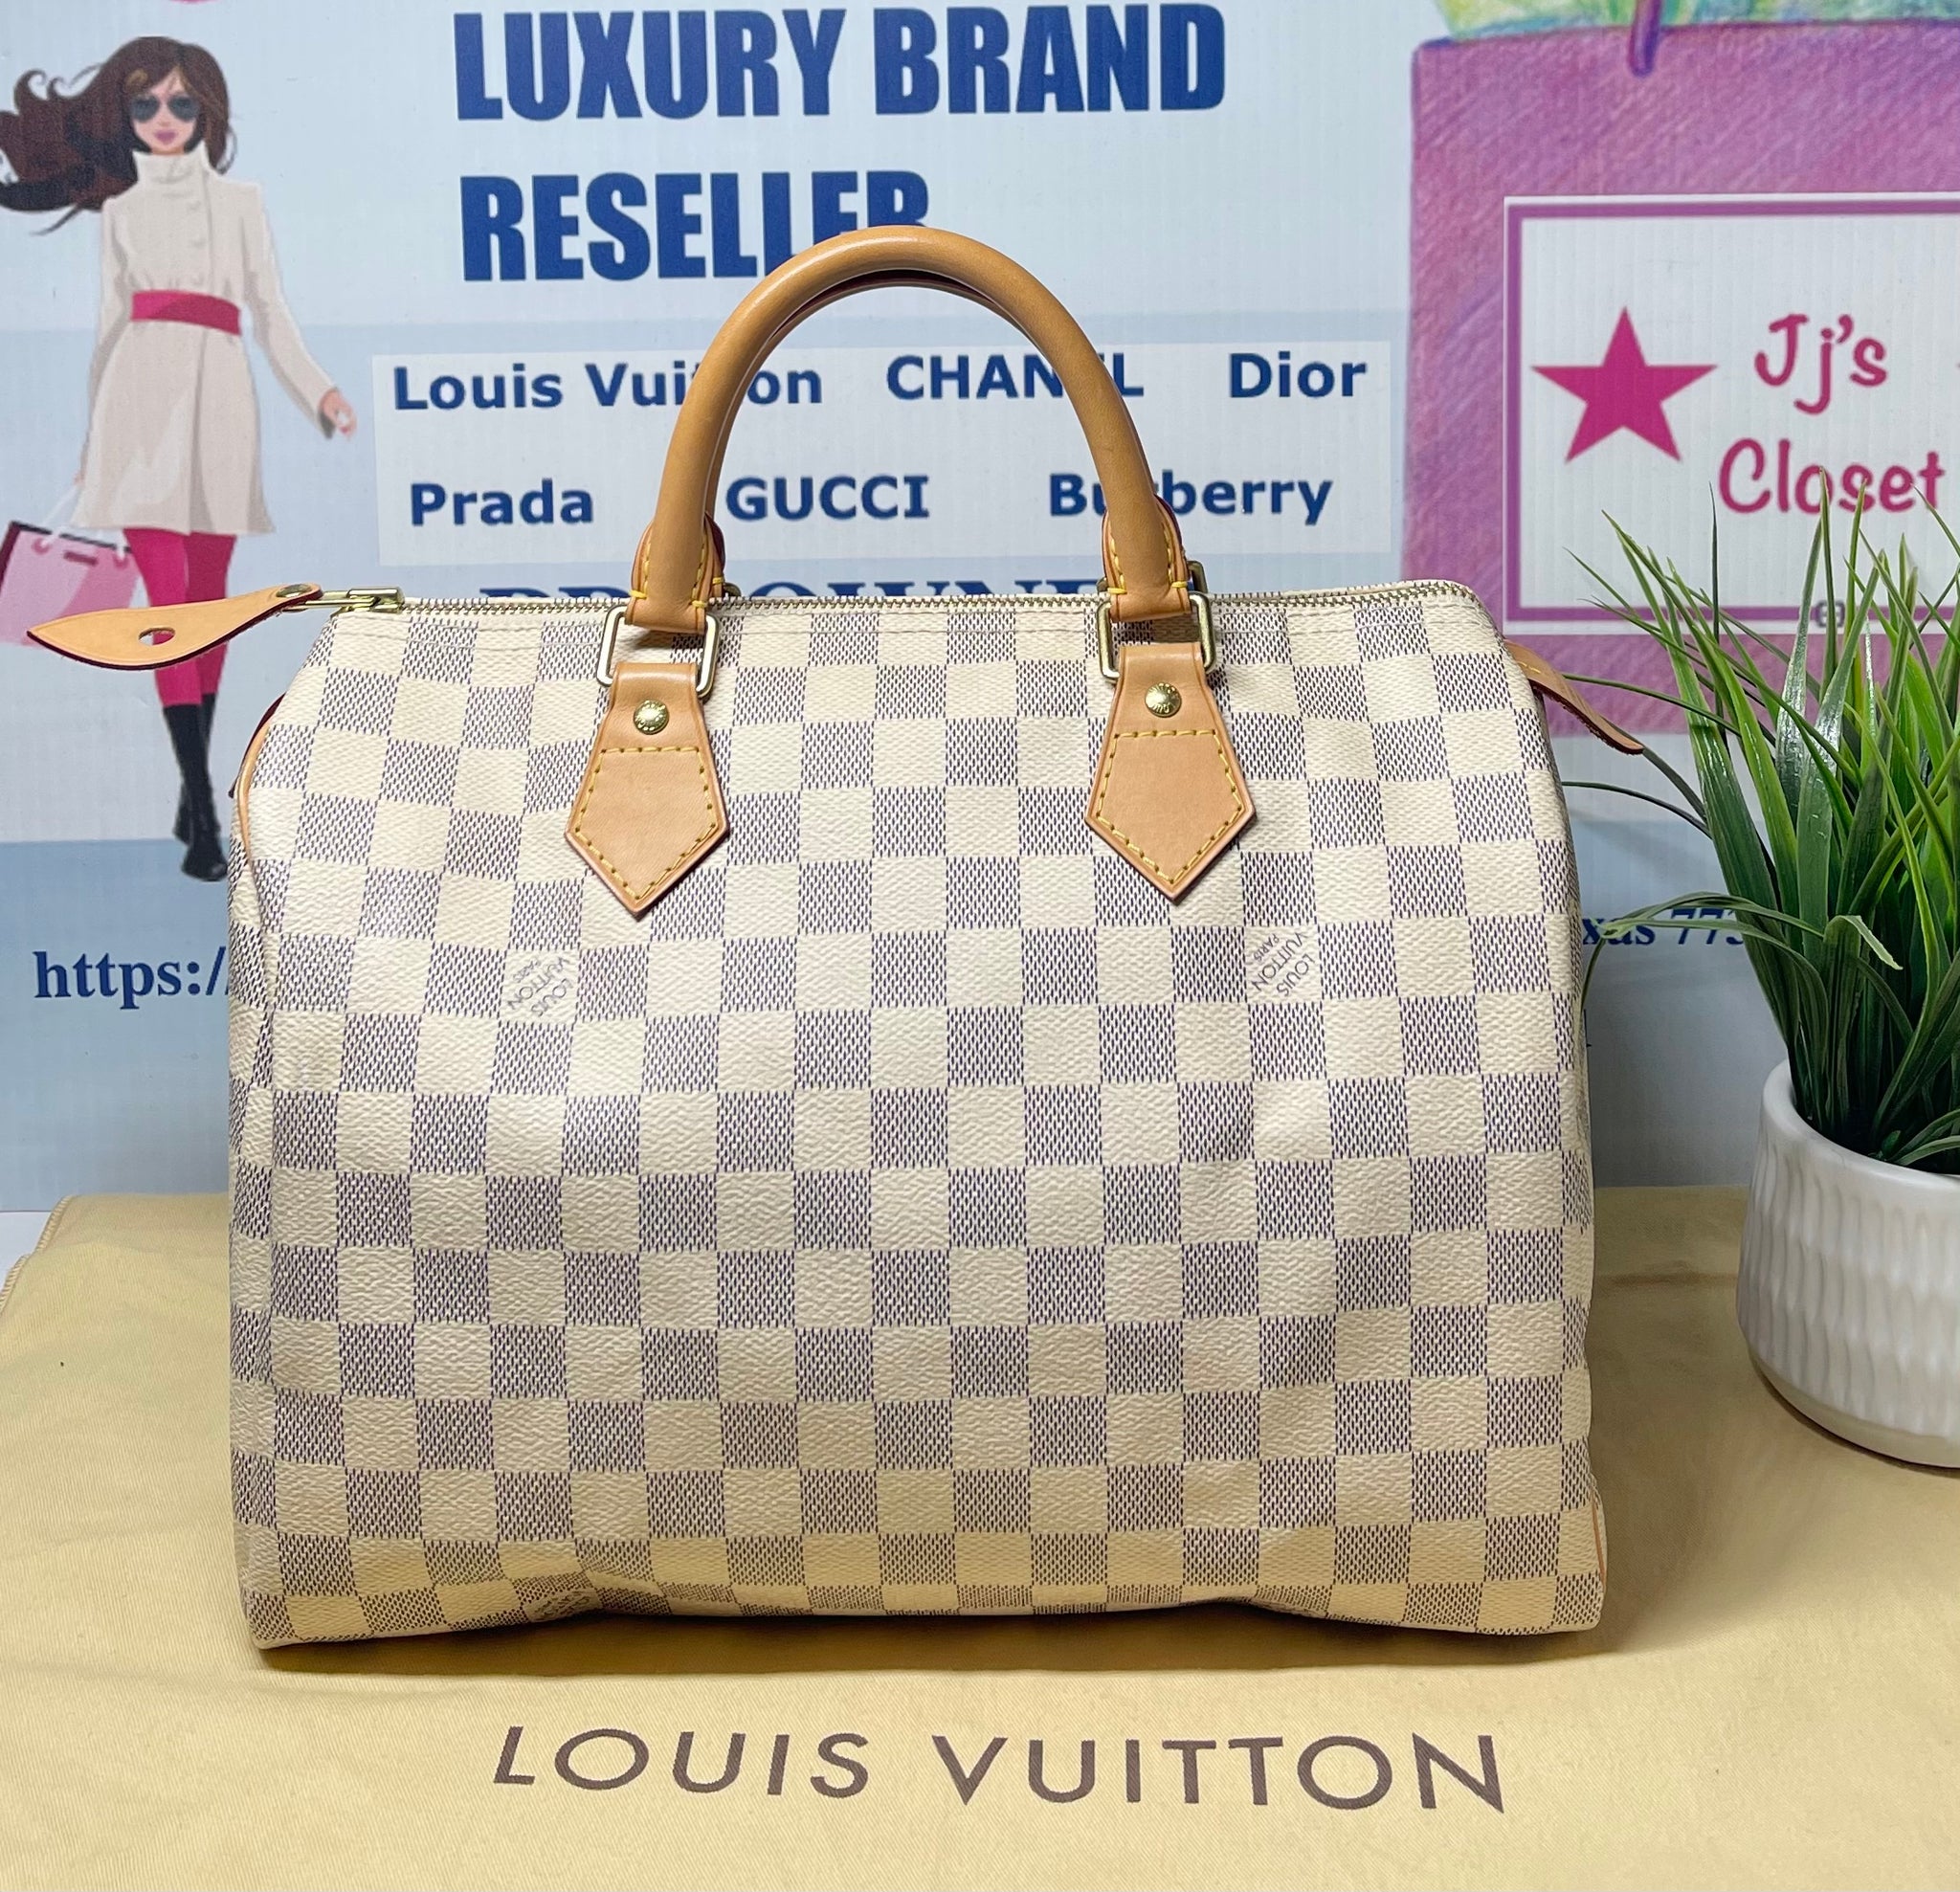 How To Spot An Authentic Louis Vuitton Speedy Bag